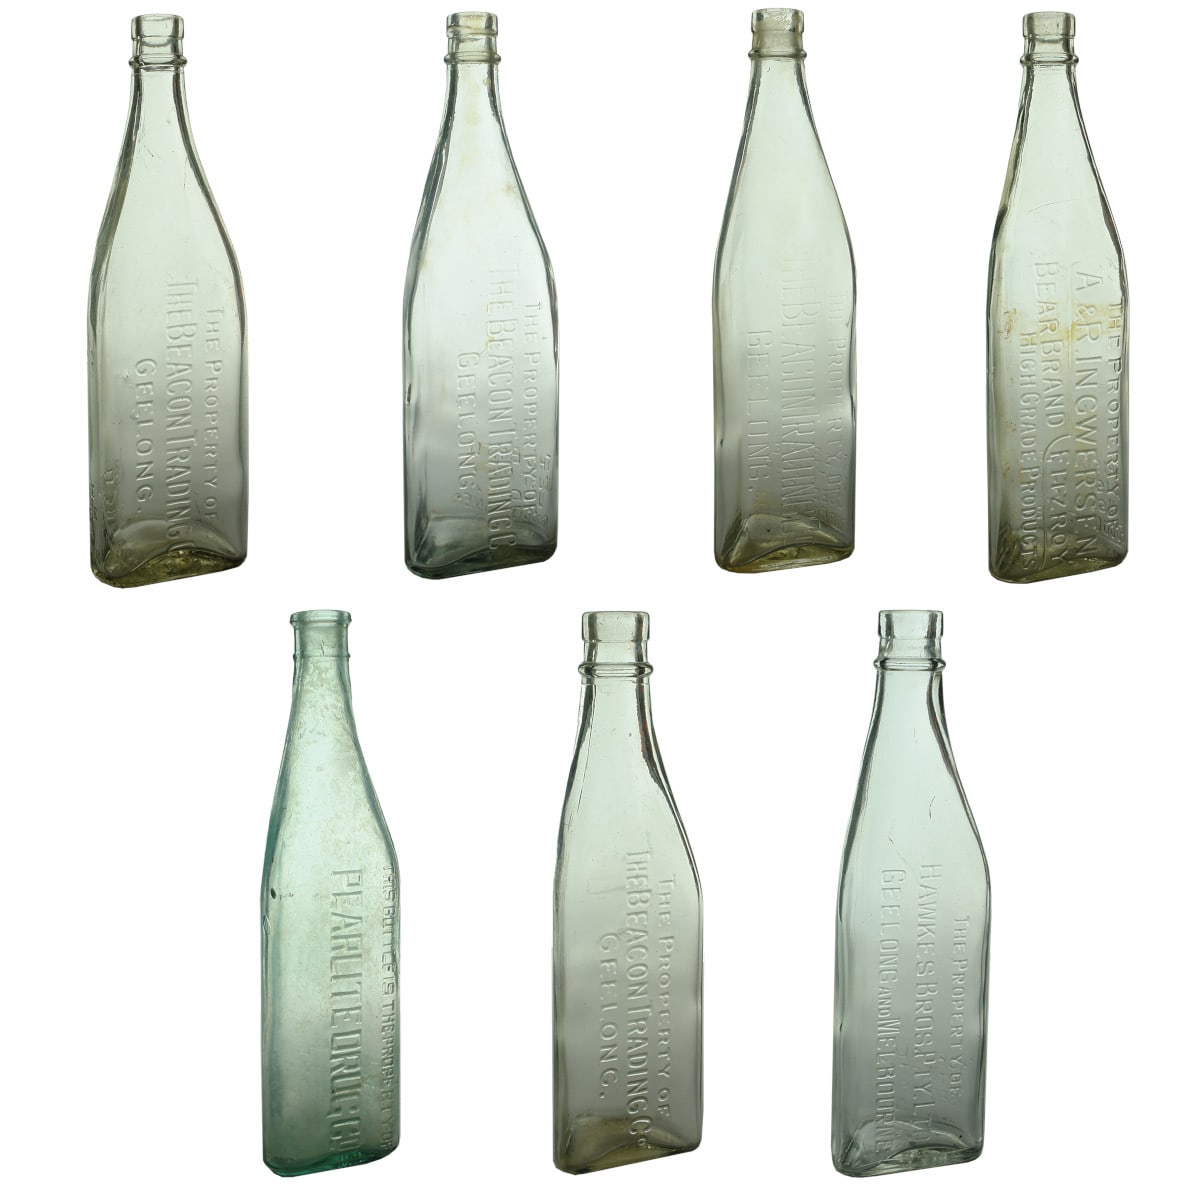 7 Kerosene/Meths type bottles: 4 x Beacon Trading Co; Ingwersen Bear Brand; Pearlite Drug Co; Hawkes Bros. (Victoria)